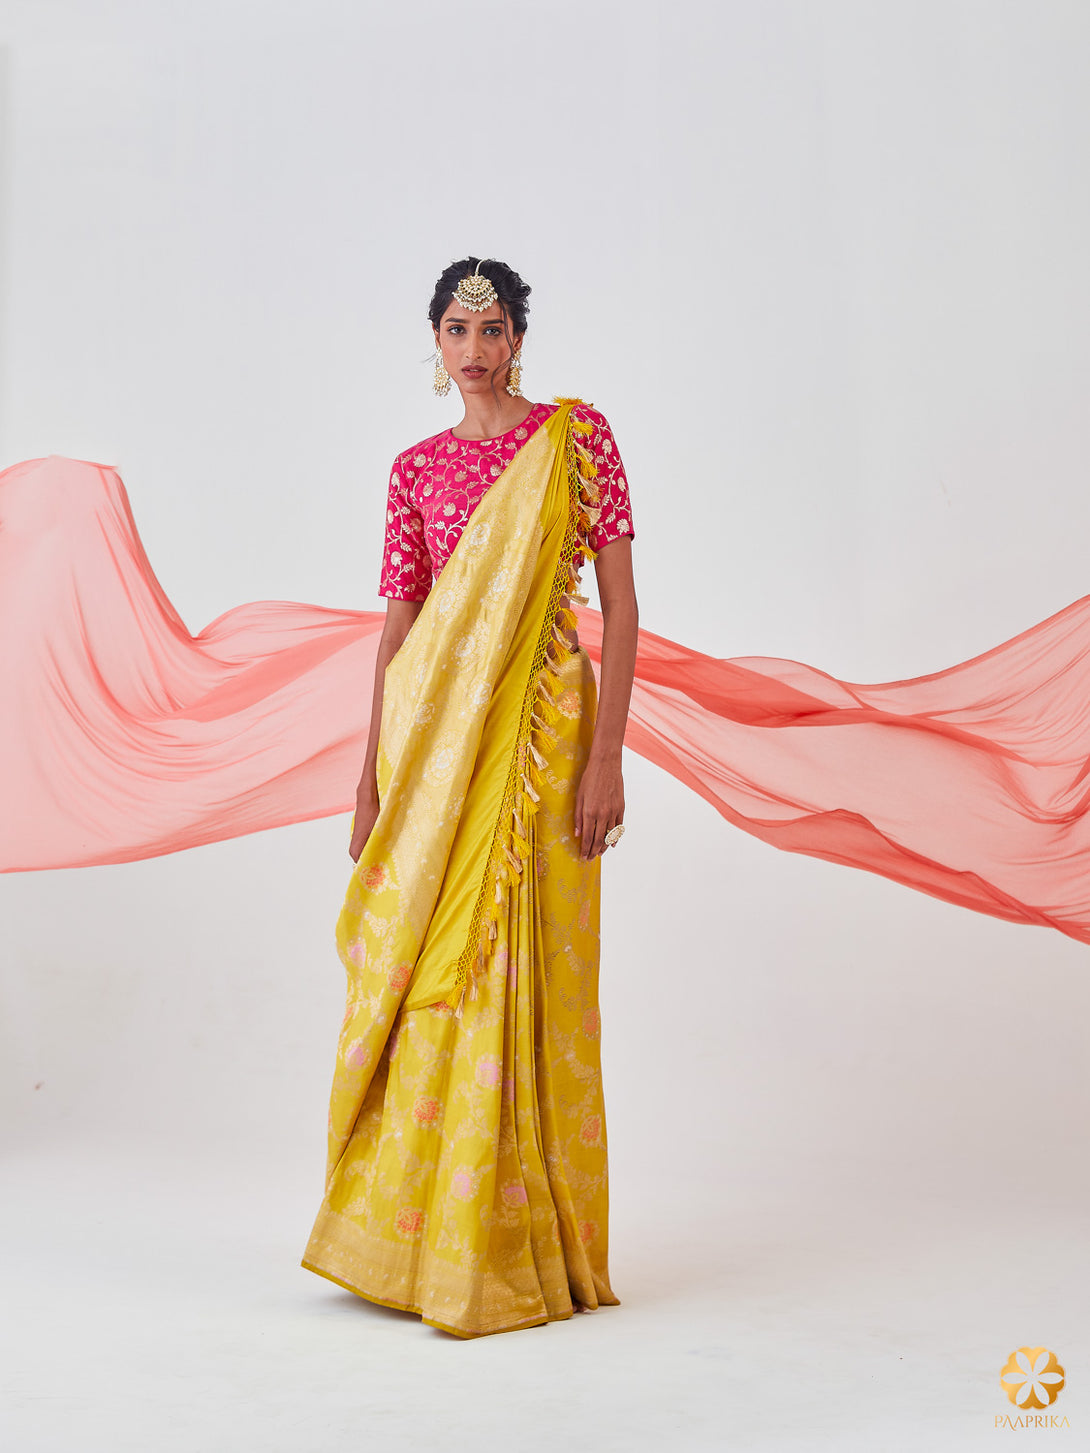 Beautiful Drape of Luxurious Pastel Yellow Banarasi Saree - Timeless Beauty and Elegance.